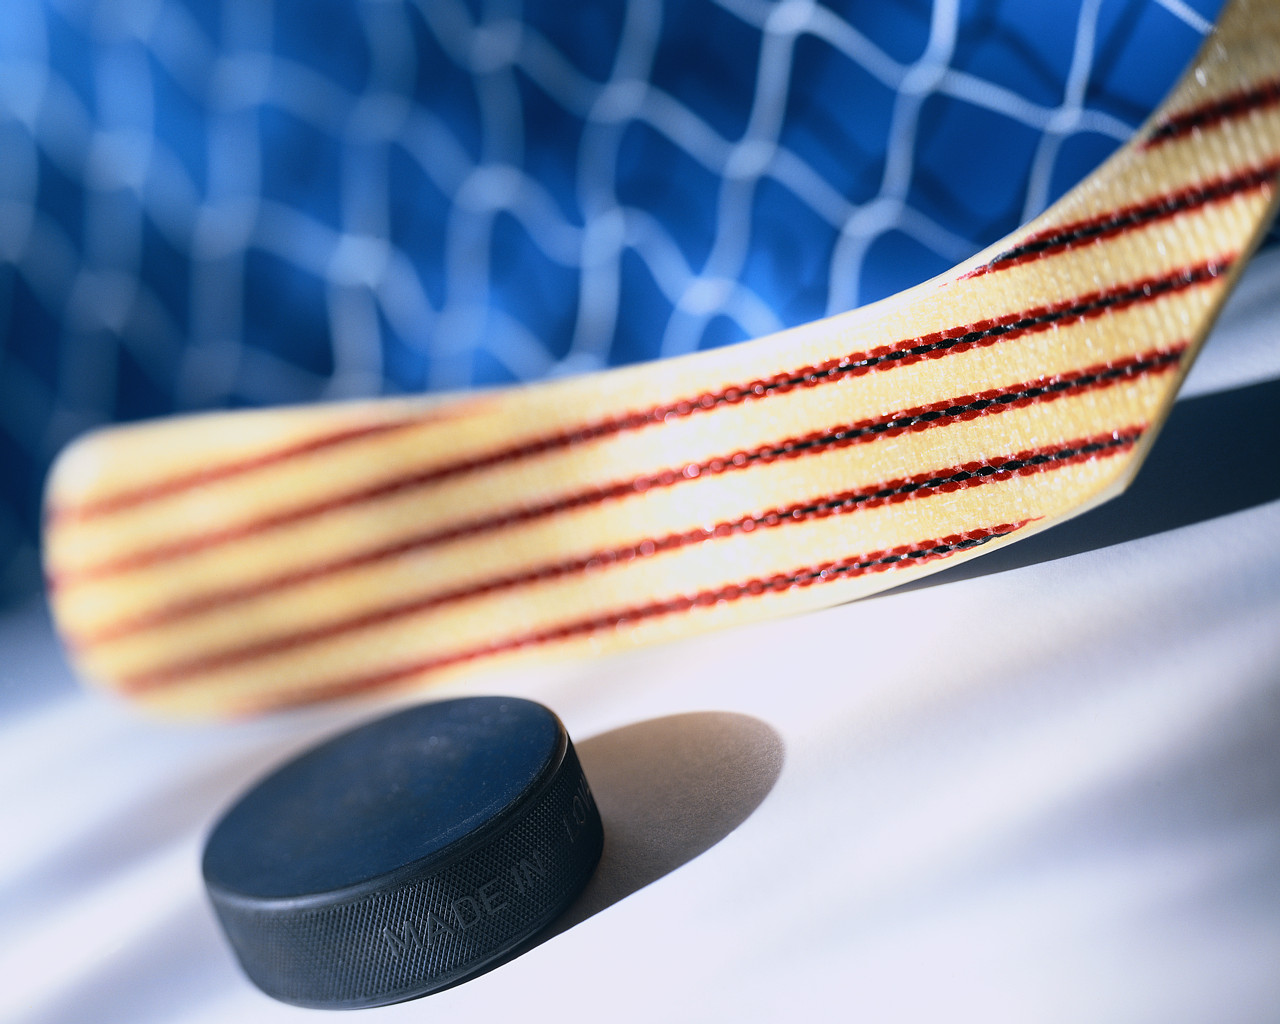 Спорт Хоккей россия, канада, лед обои рабочий стол